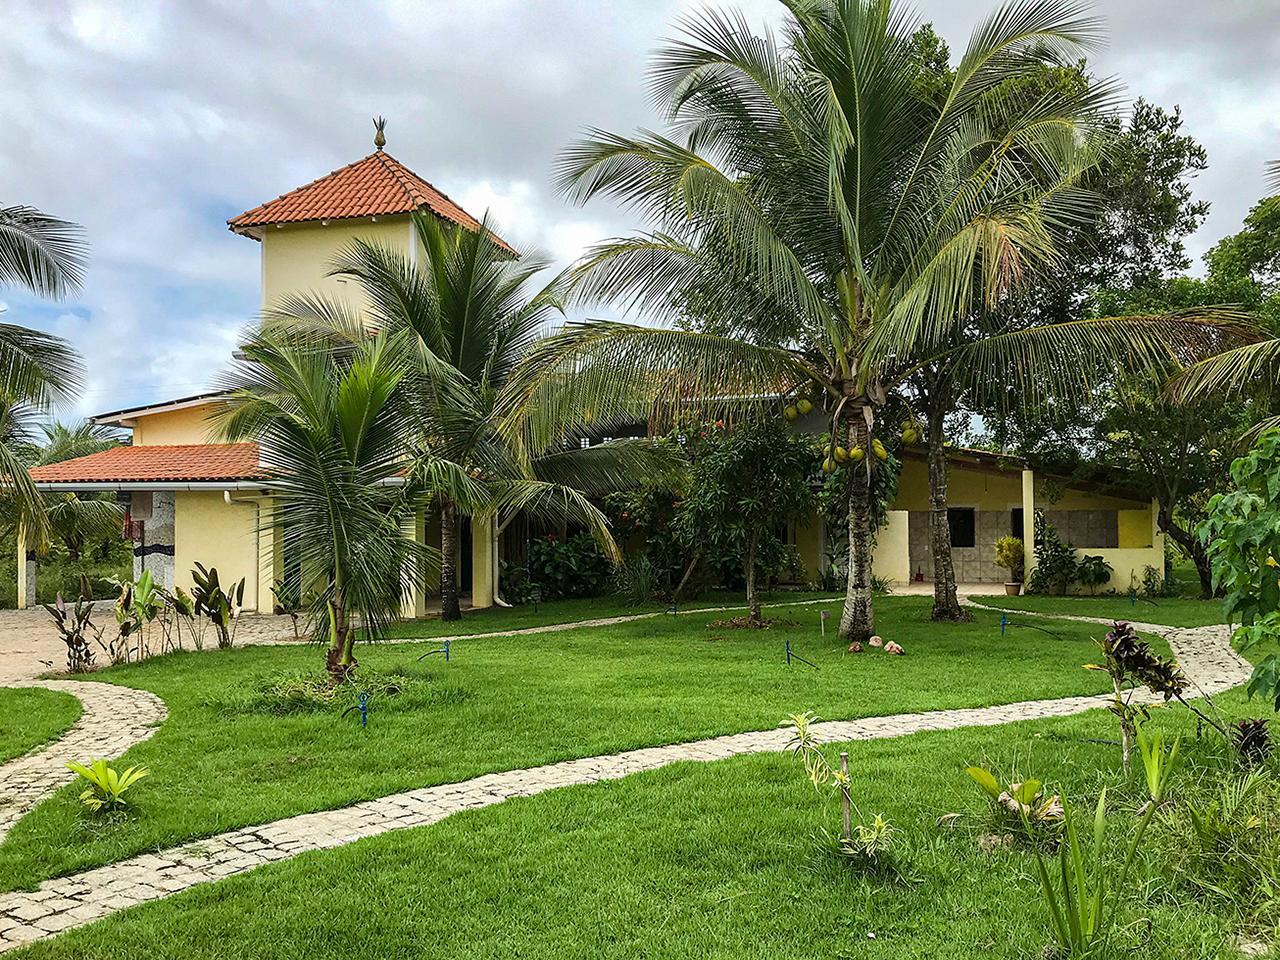 Farmhaus "Fazenda Eco Jardim" Ferienhaus in Brasilien